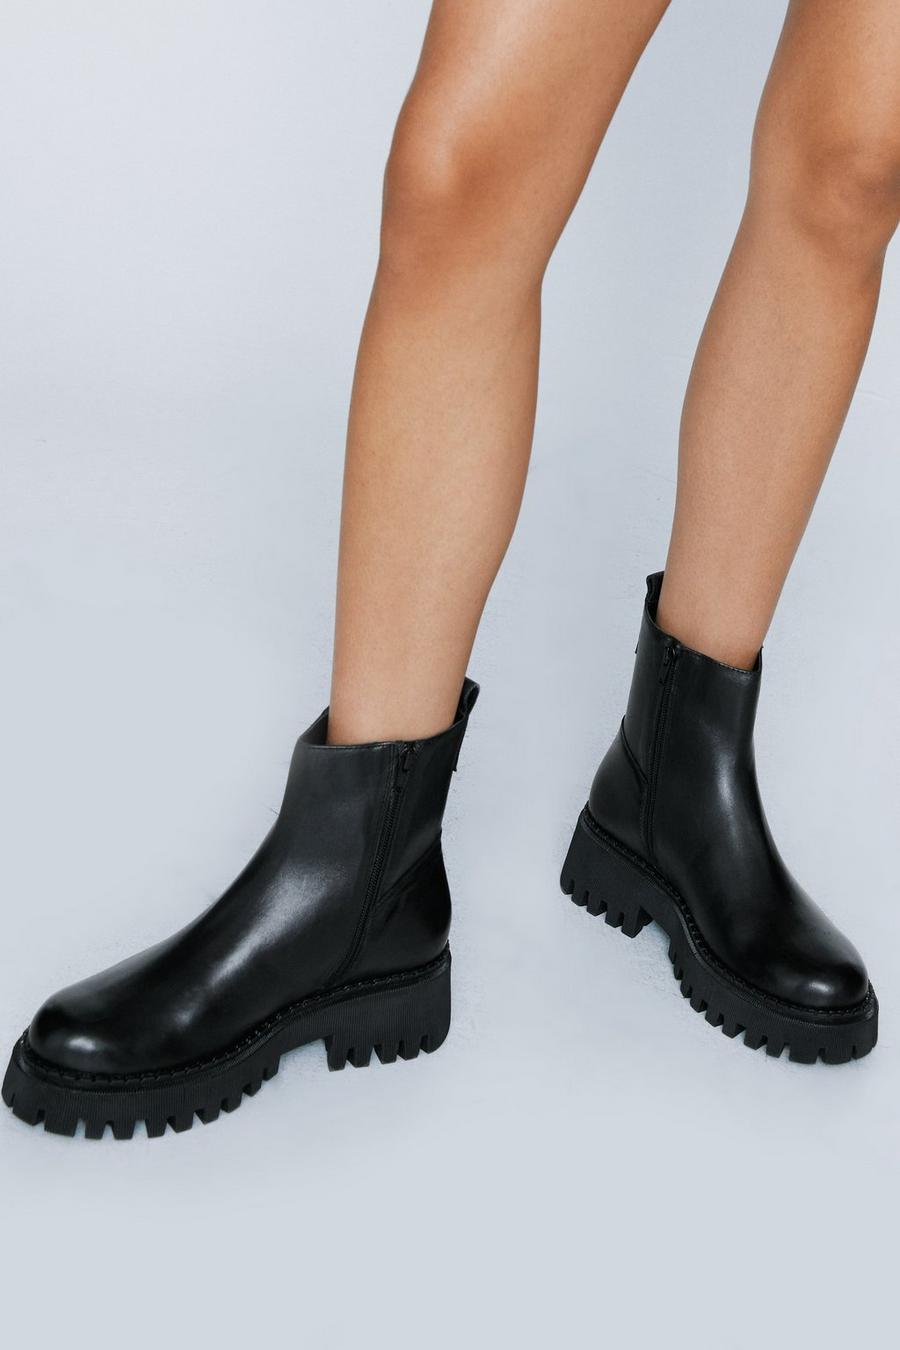 gemeenschap Spruit Th Chelsea Boots | Women's Chelsea Ankle Boots | Nasty Gal